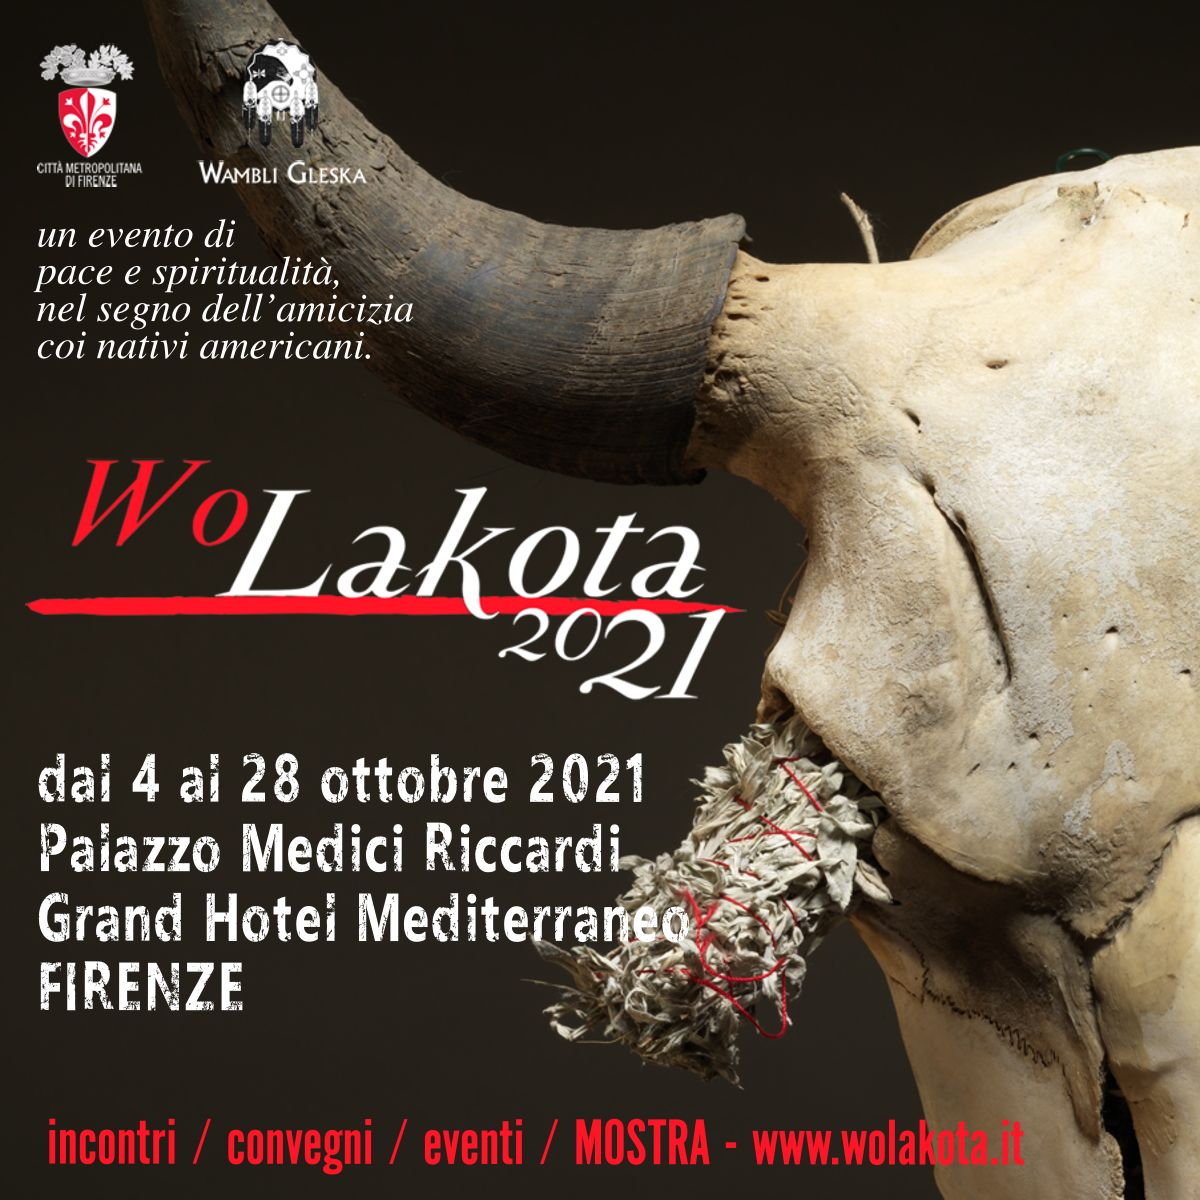 Evento Wolakota 2021